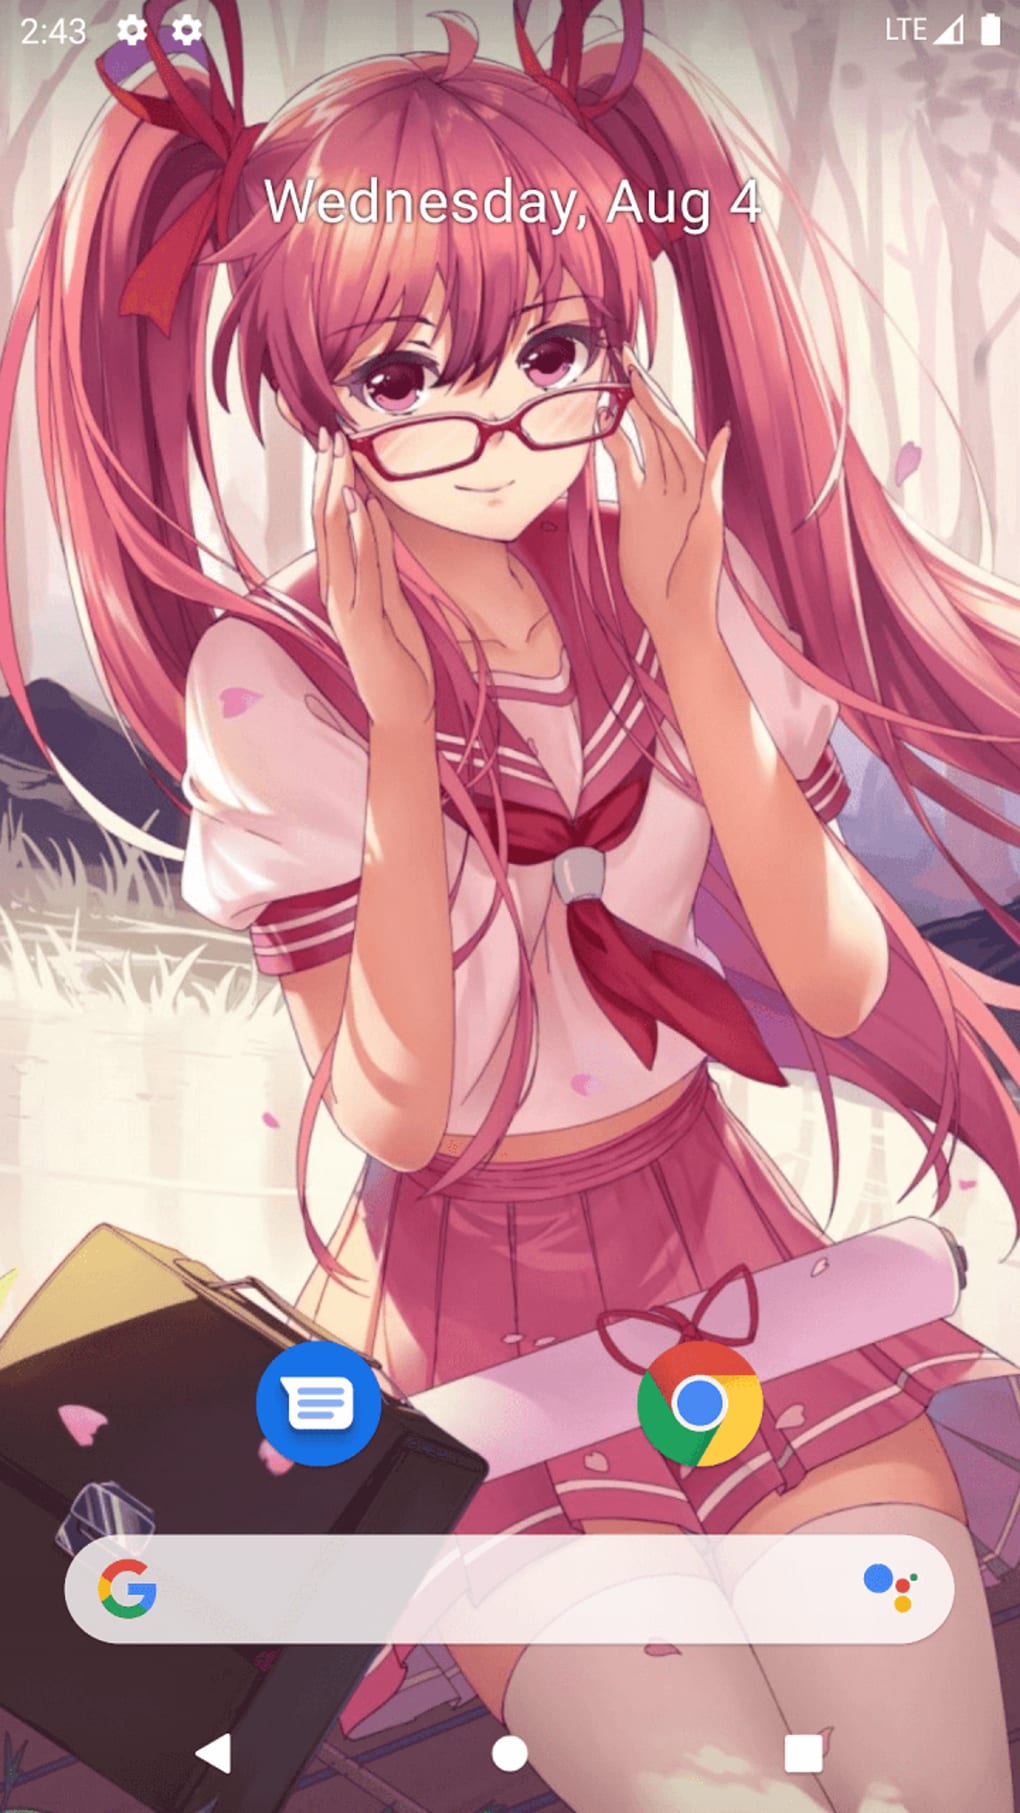 Anime wallpaper  Kawaii girls - Apps on Google Play